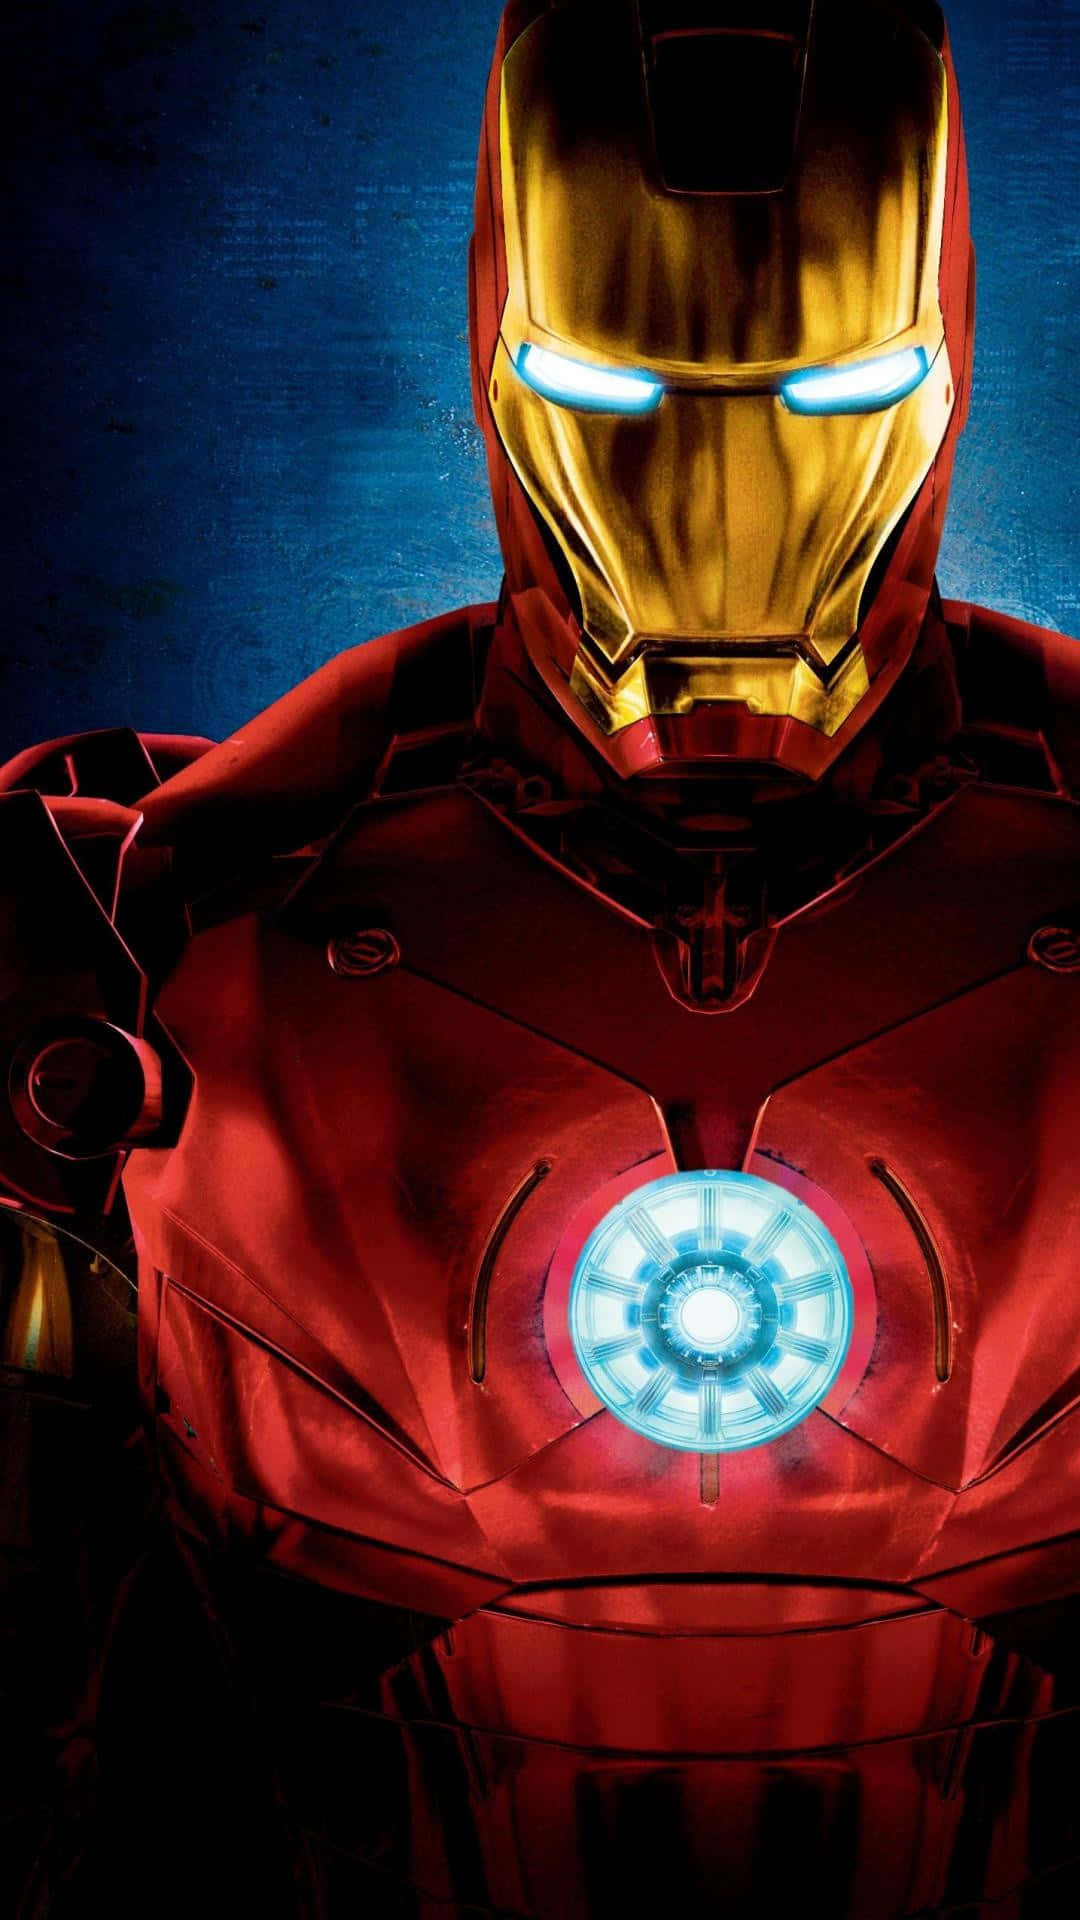 Disfrutadel Tema Genial De Iron Man En Tu Iphone. Fondo de pantalla